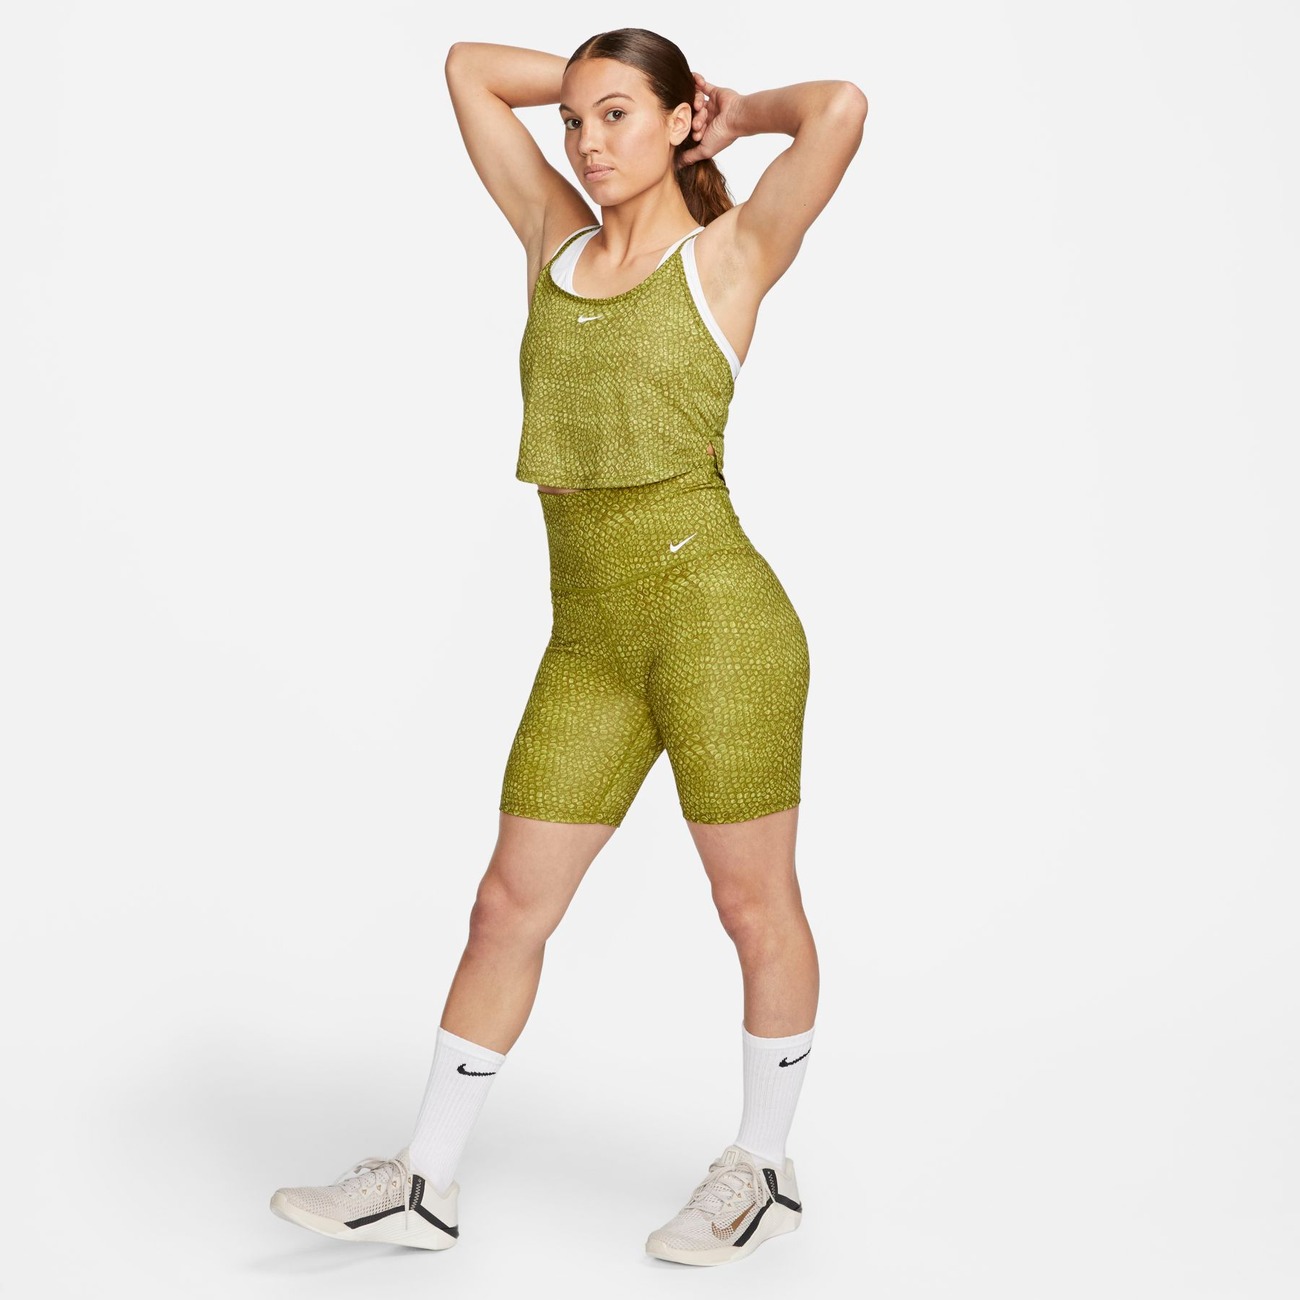 Encontre a Regata Nike One Dri-fit Femme Strappy Feminina